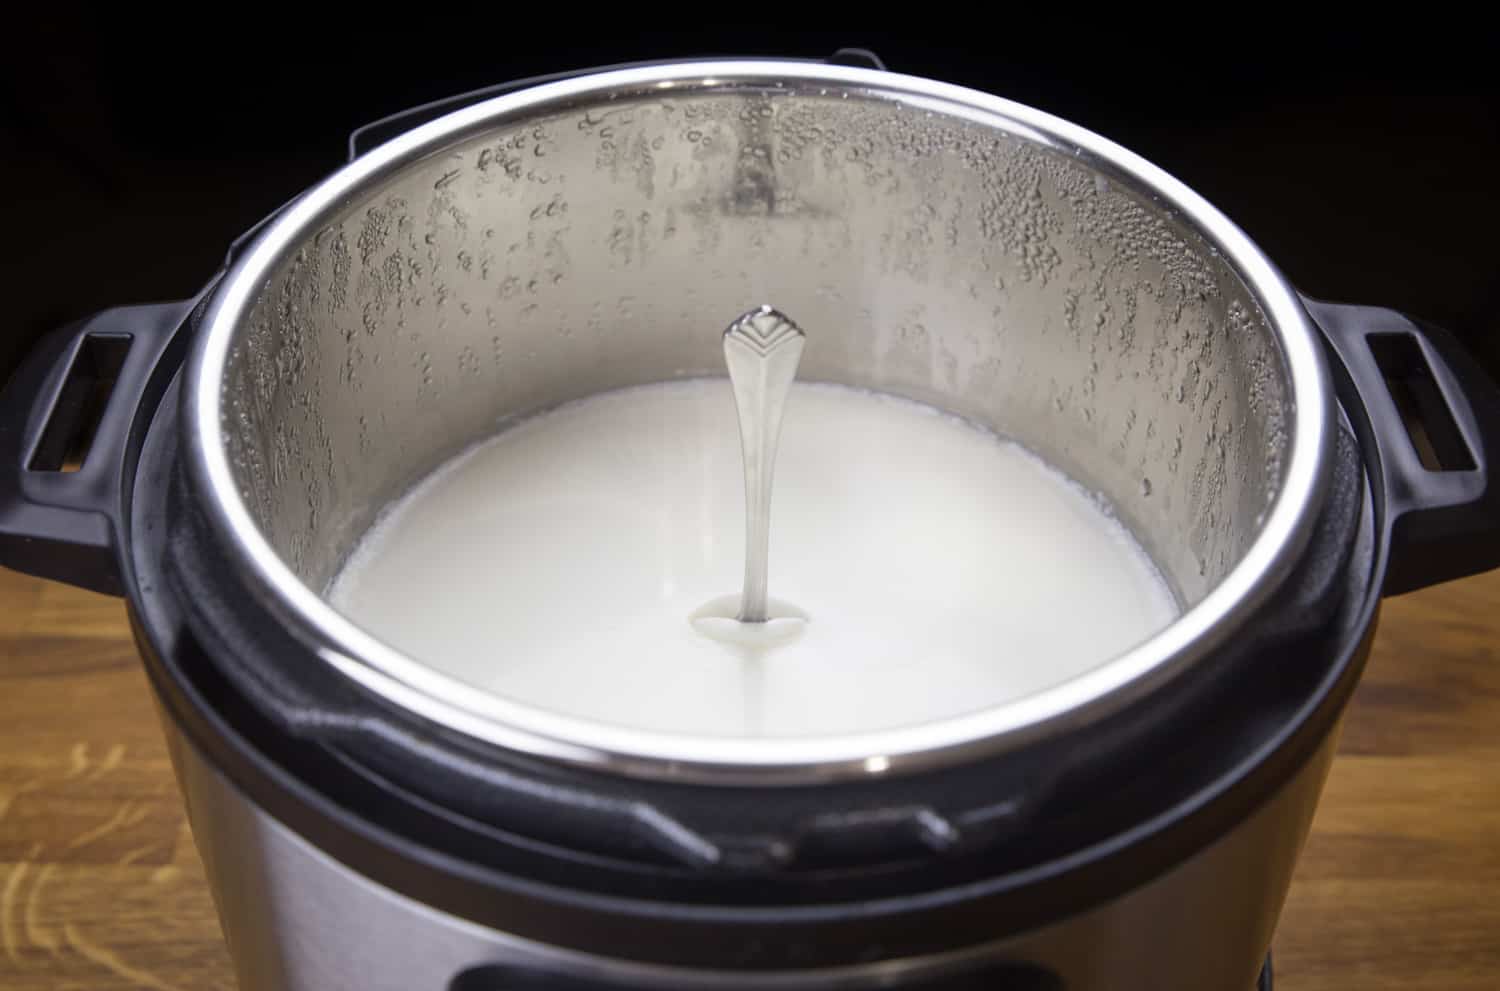 how-do-you-make-yogurt-in-an-electric-pressure-cooker